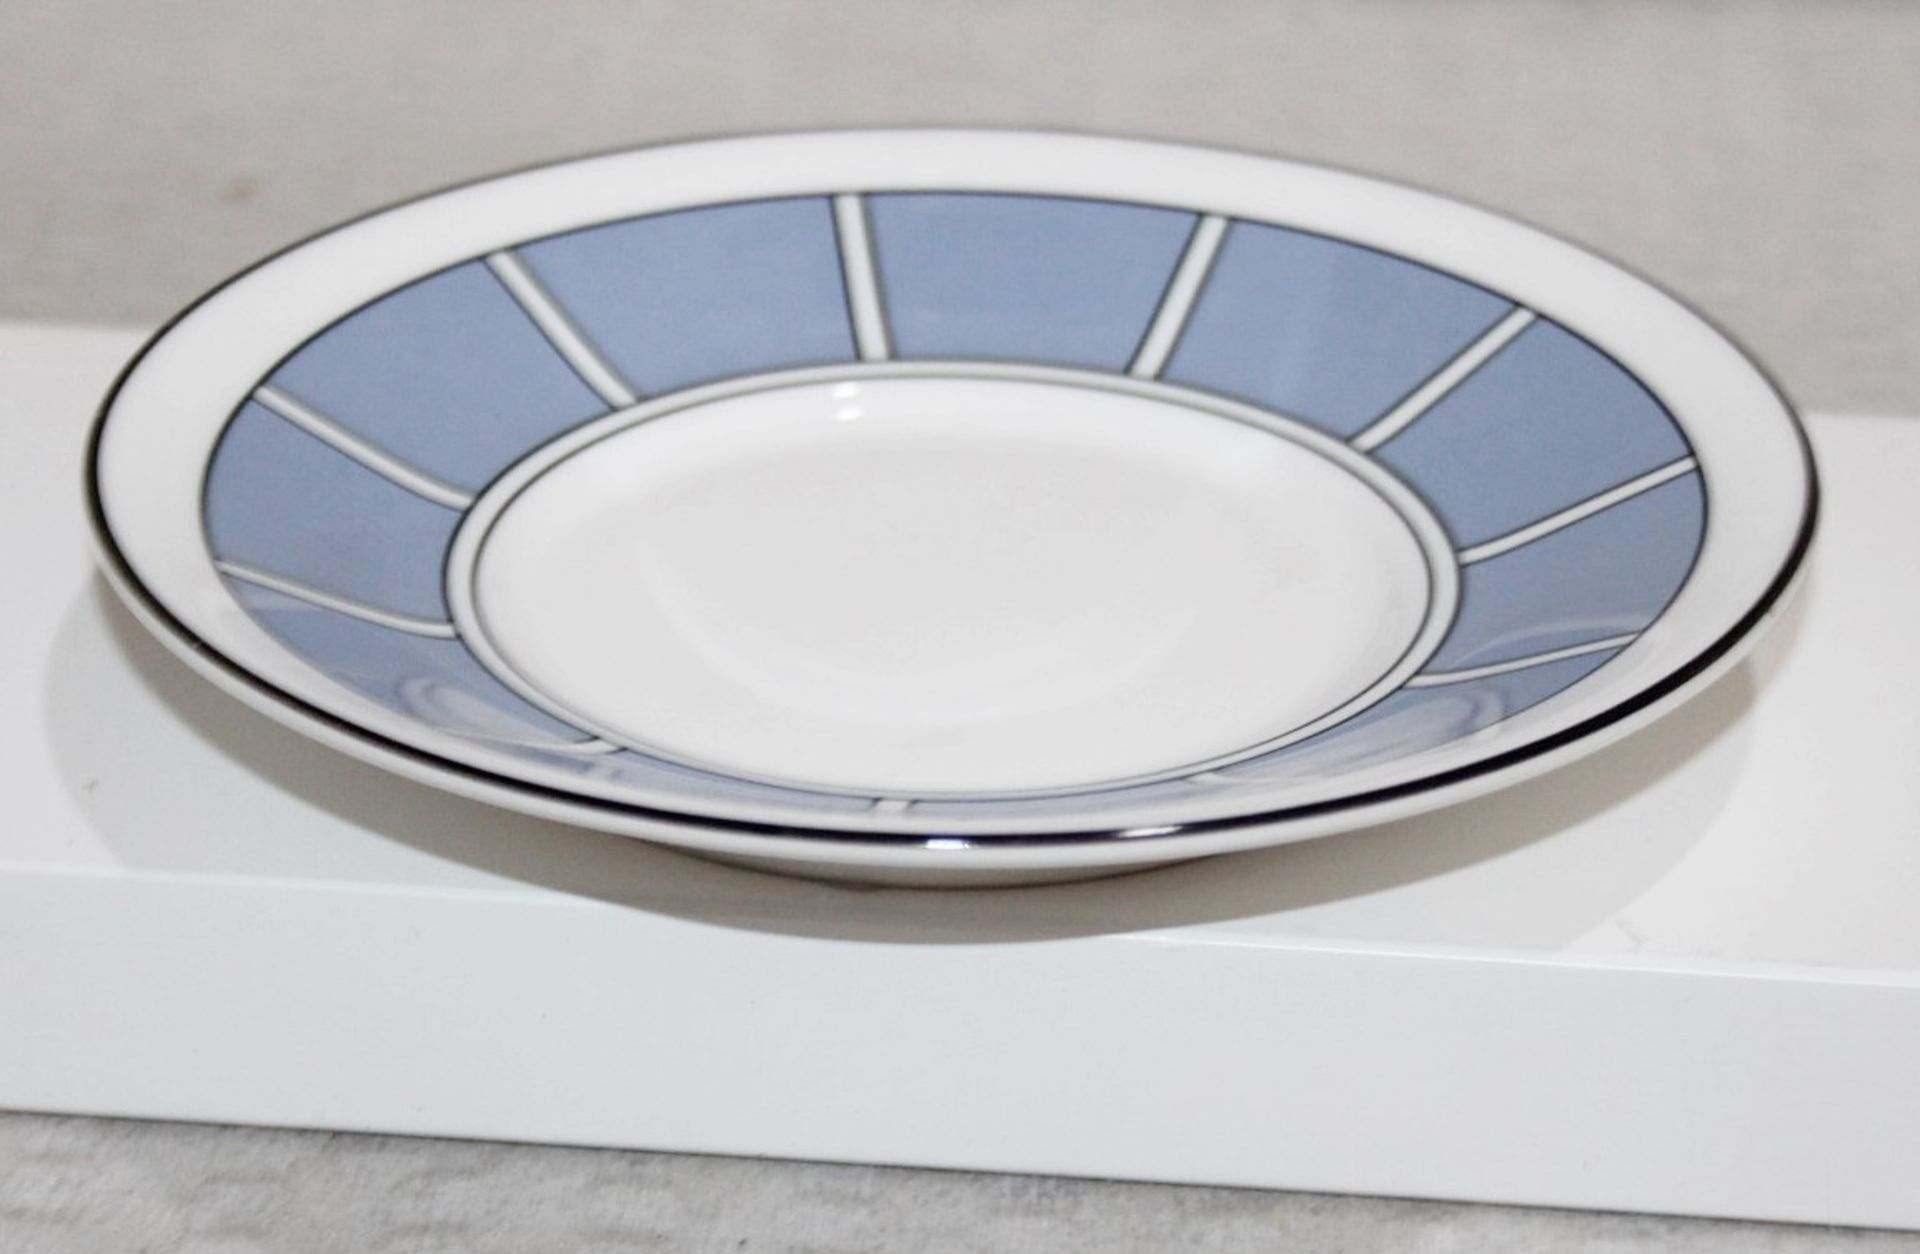 1 x O.W. LONDON 'Loop' Fine Bone China Saucer / Trinket Dish With A Geometric Print - No Reserve - Image 3 of 3